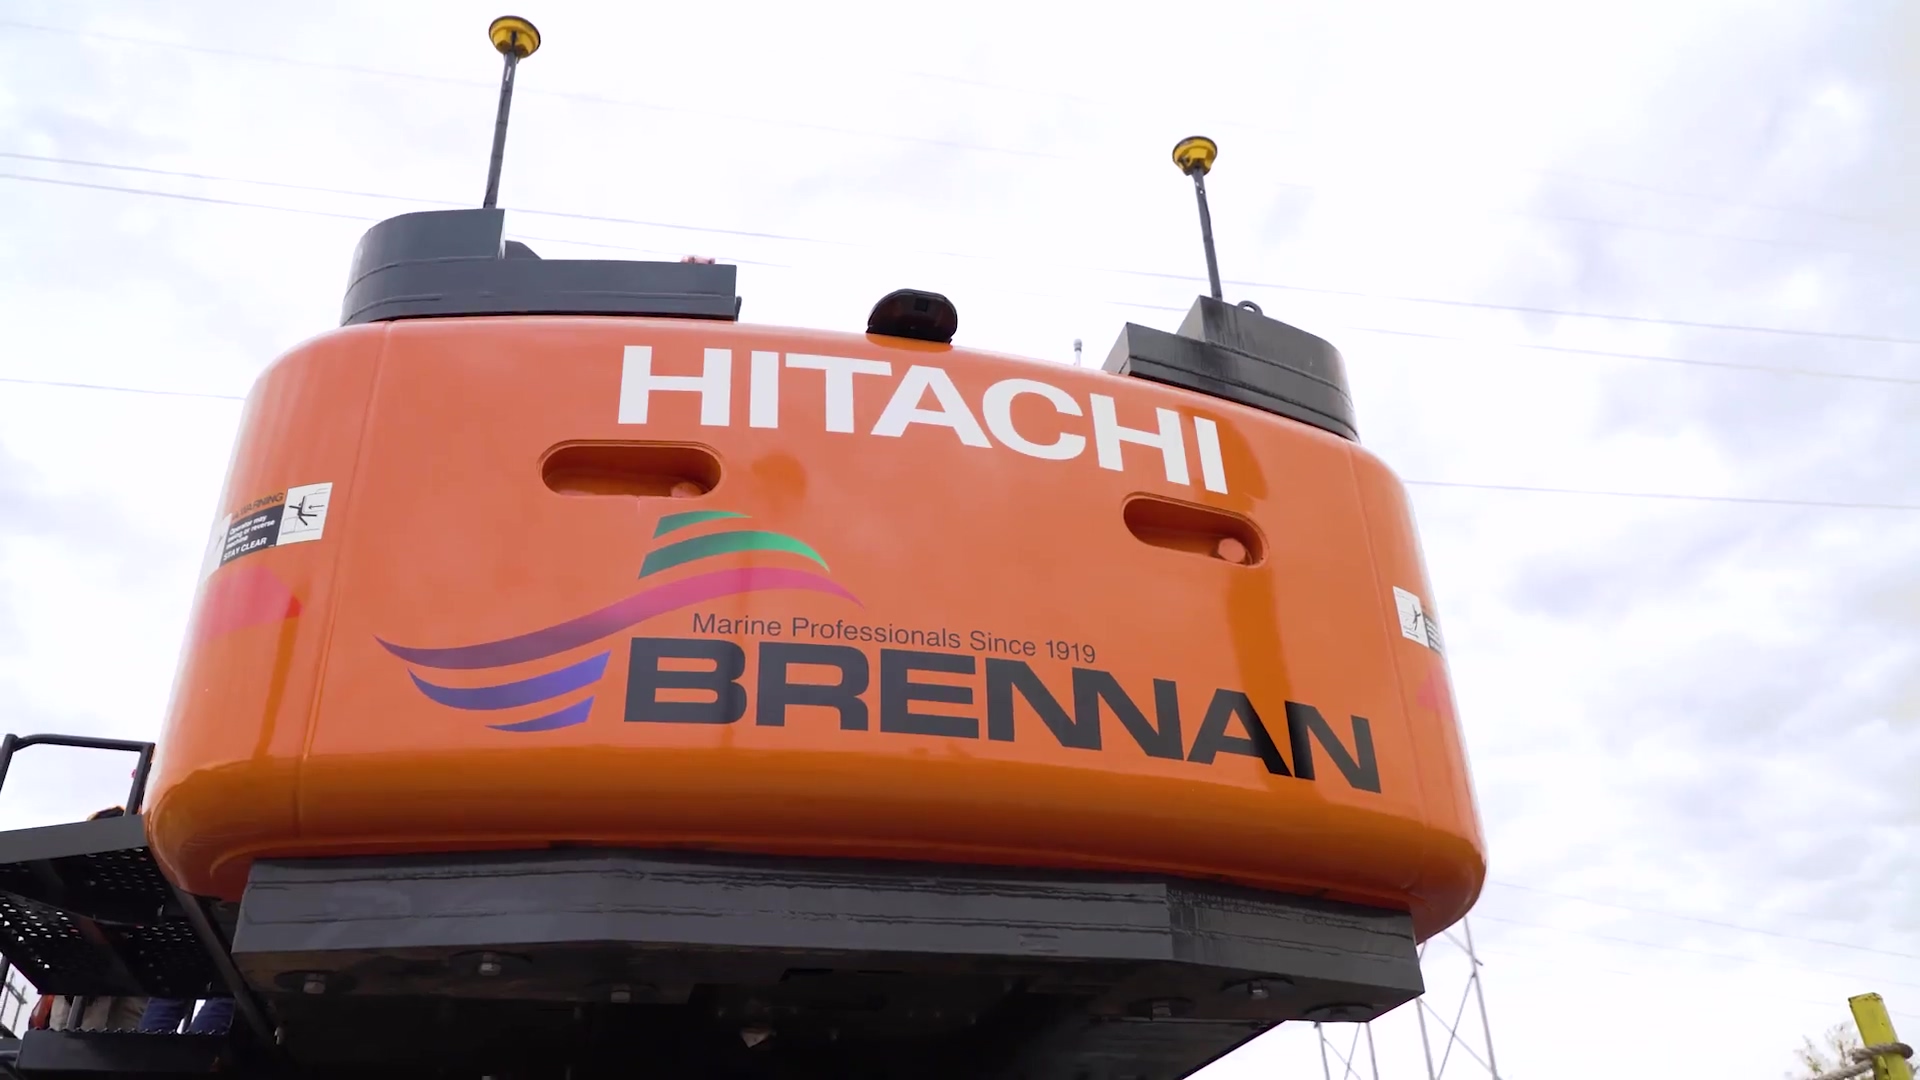 2019 Hitachi Breakout-Video-Brennan 1080p